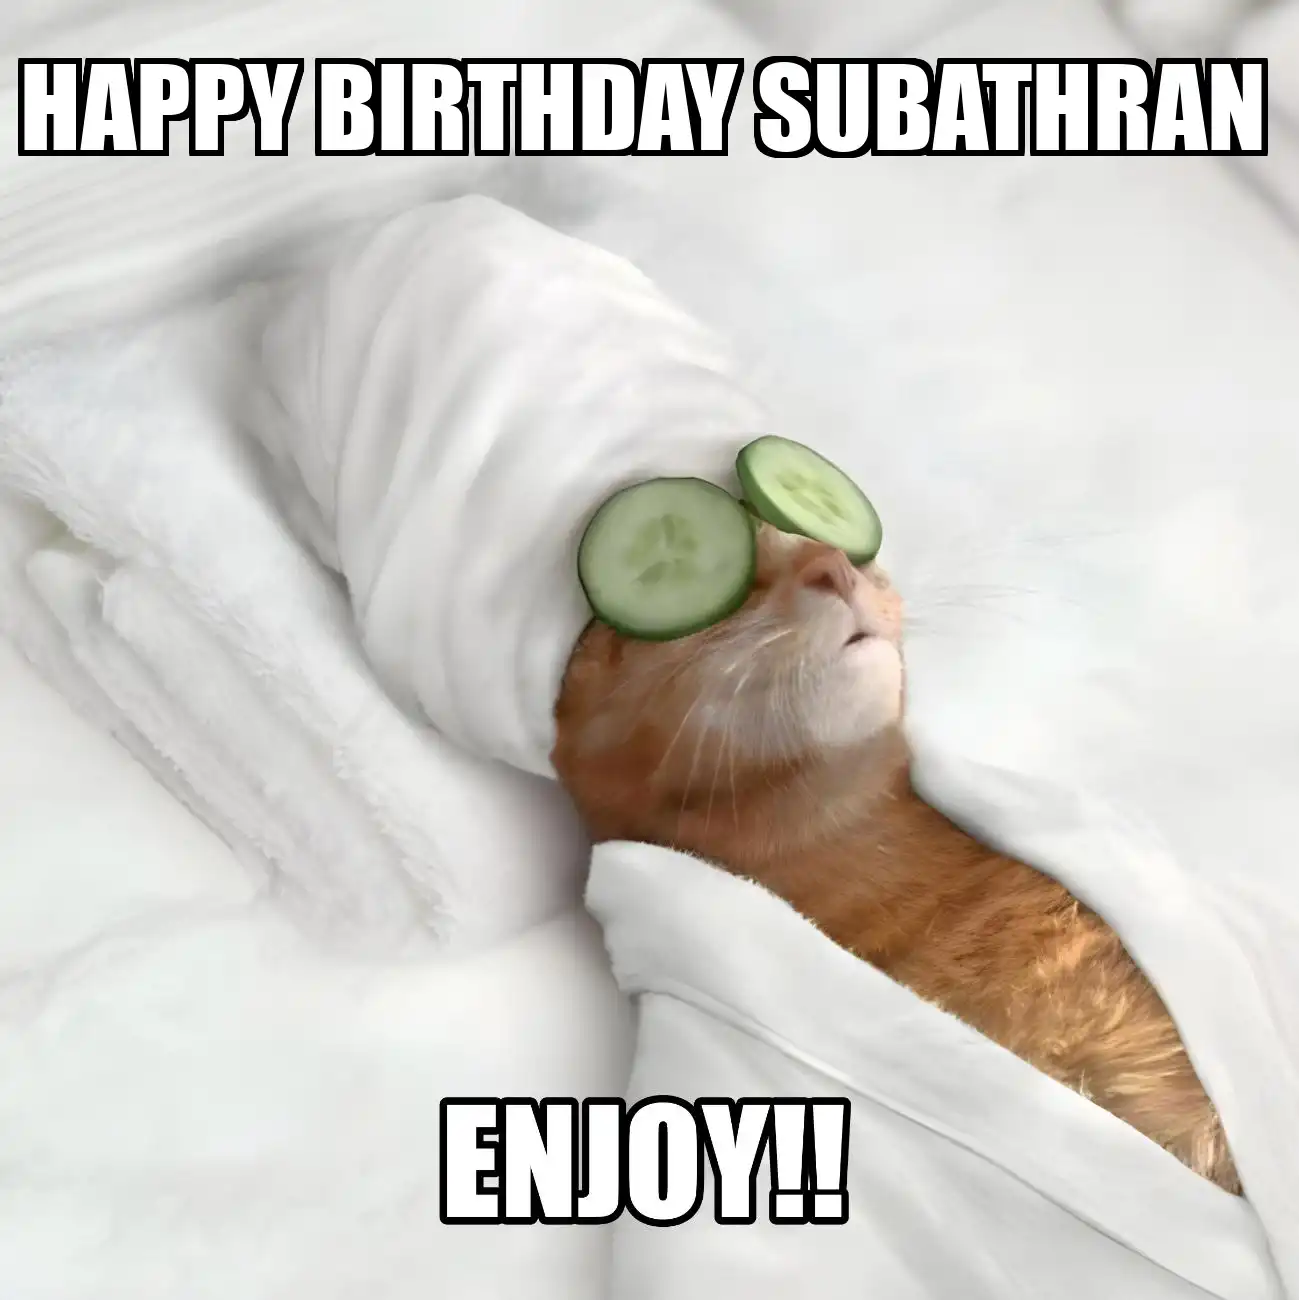 Happy Birthday Subathran Enjoy Cat Meme